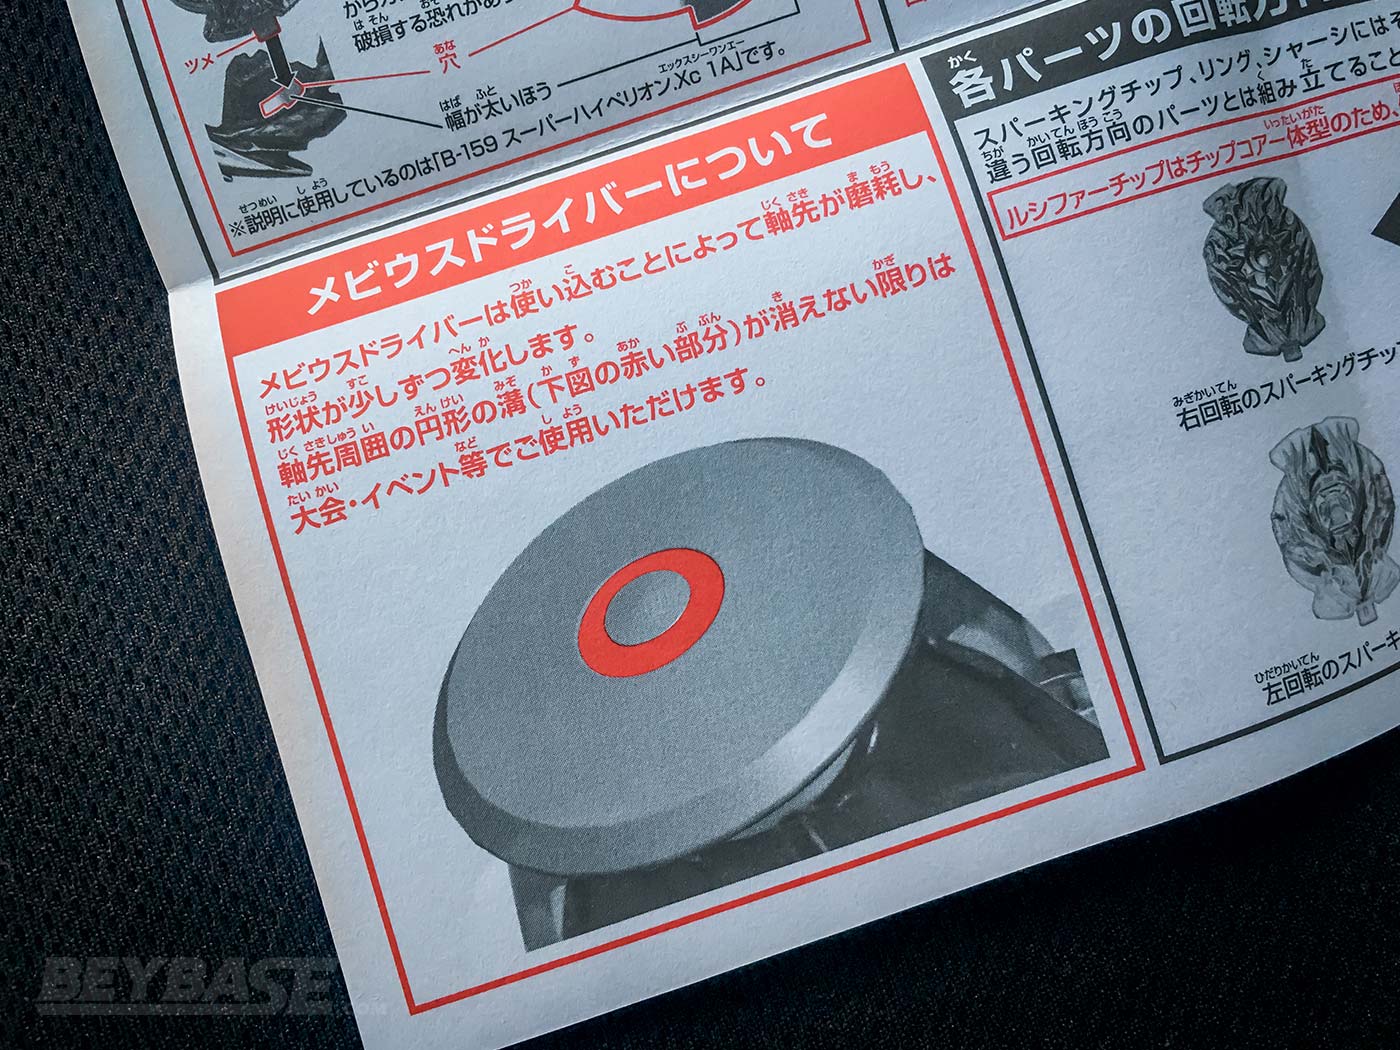 mobius driver wear regulations on japanese instruction sheet